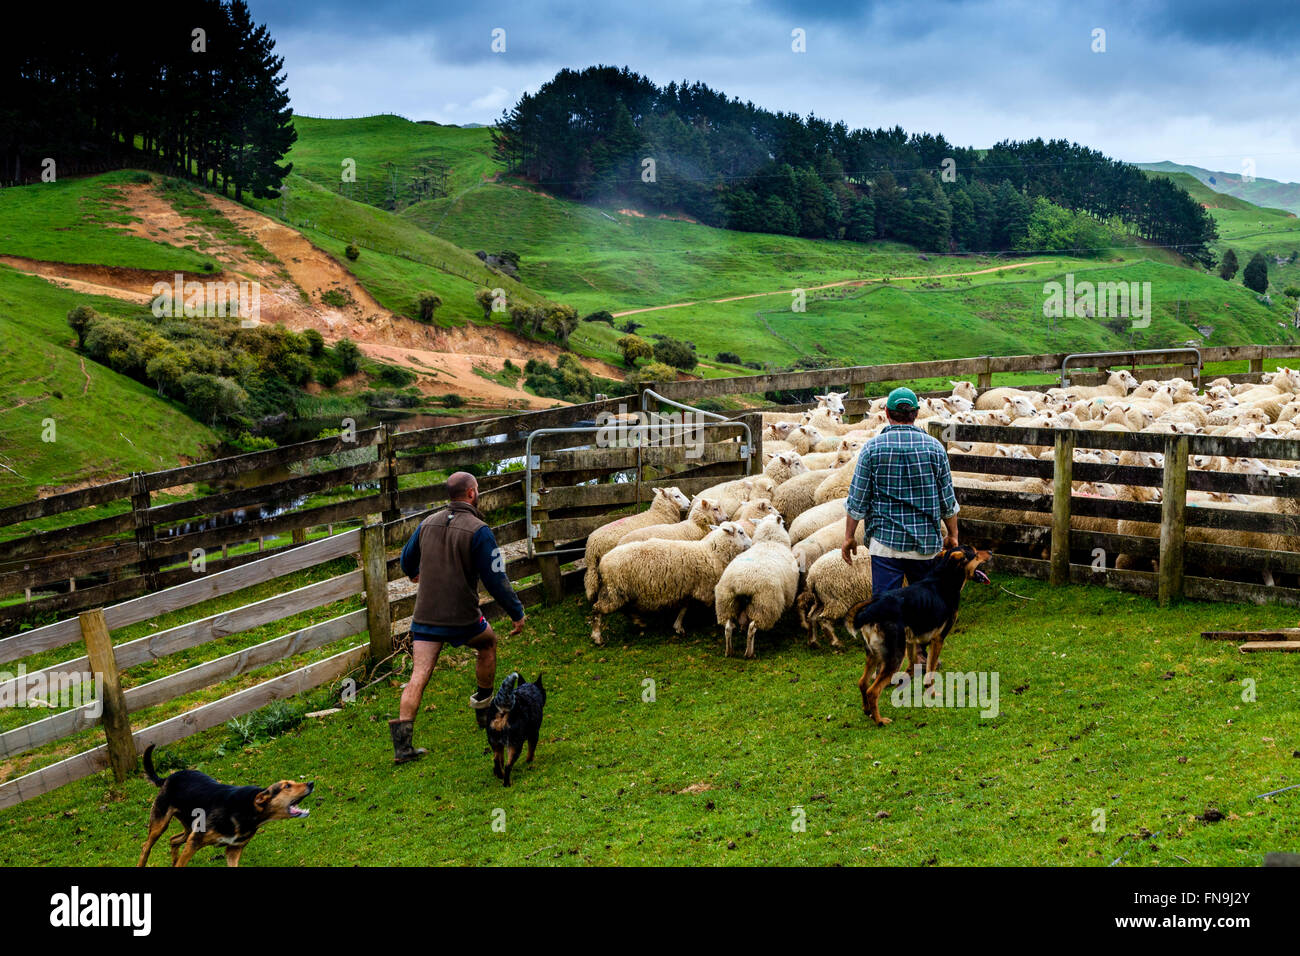 Sheep In A Pen Waiting To Be Sheared, Sheep Farm, Pukekohe, New Zealand Stock Photo